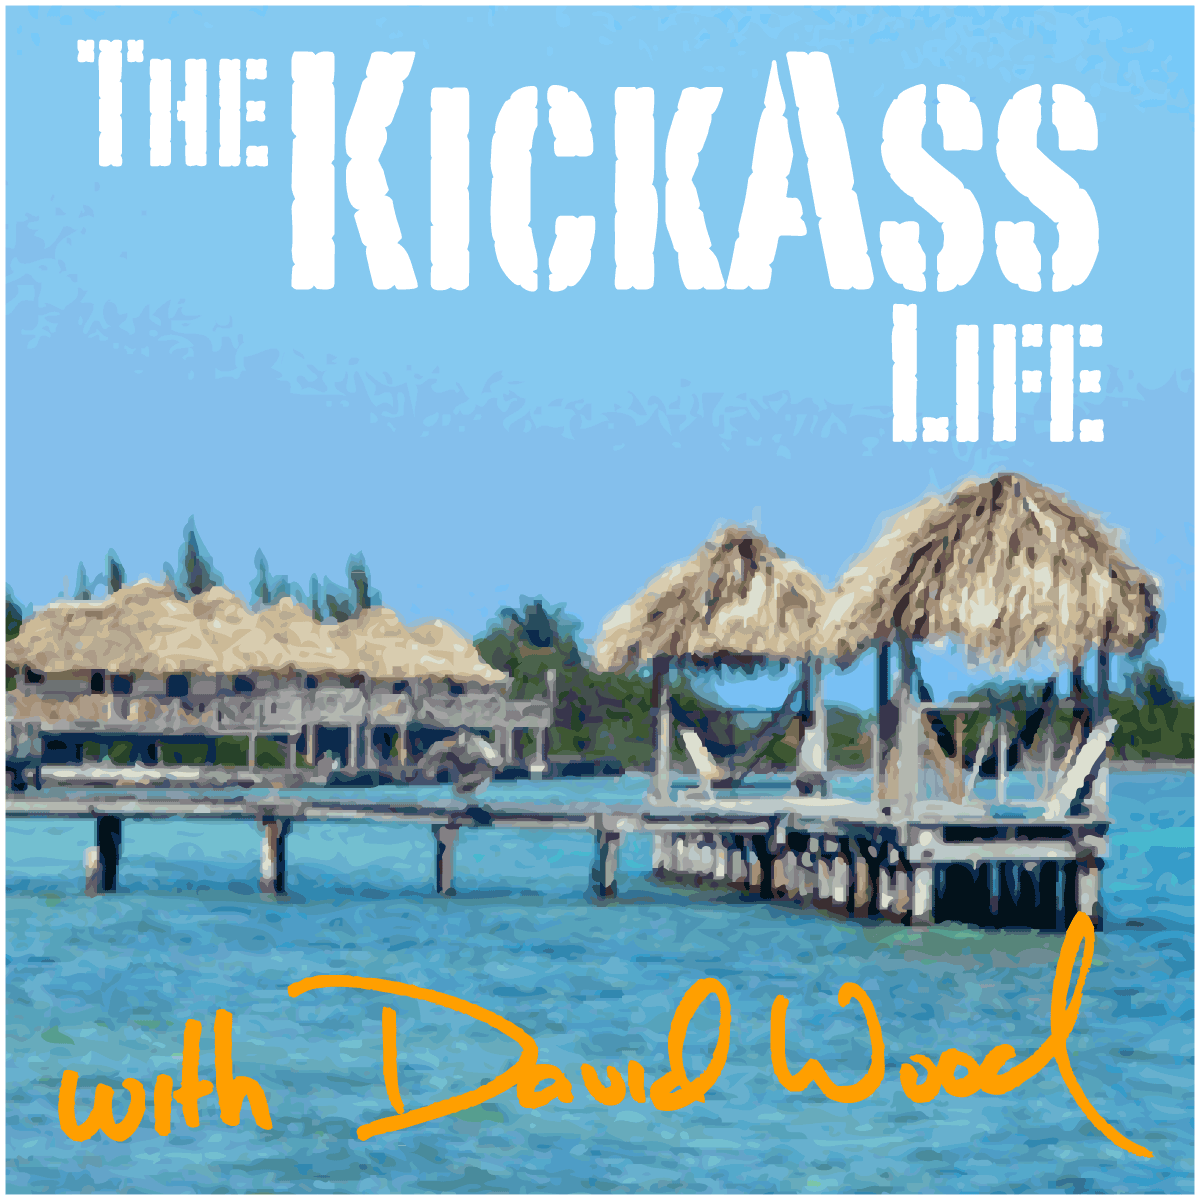 001 Introducing David Wood And The Kickass Life The Kickass Life Podcast With David Wood